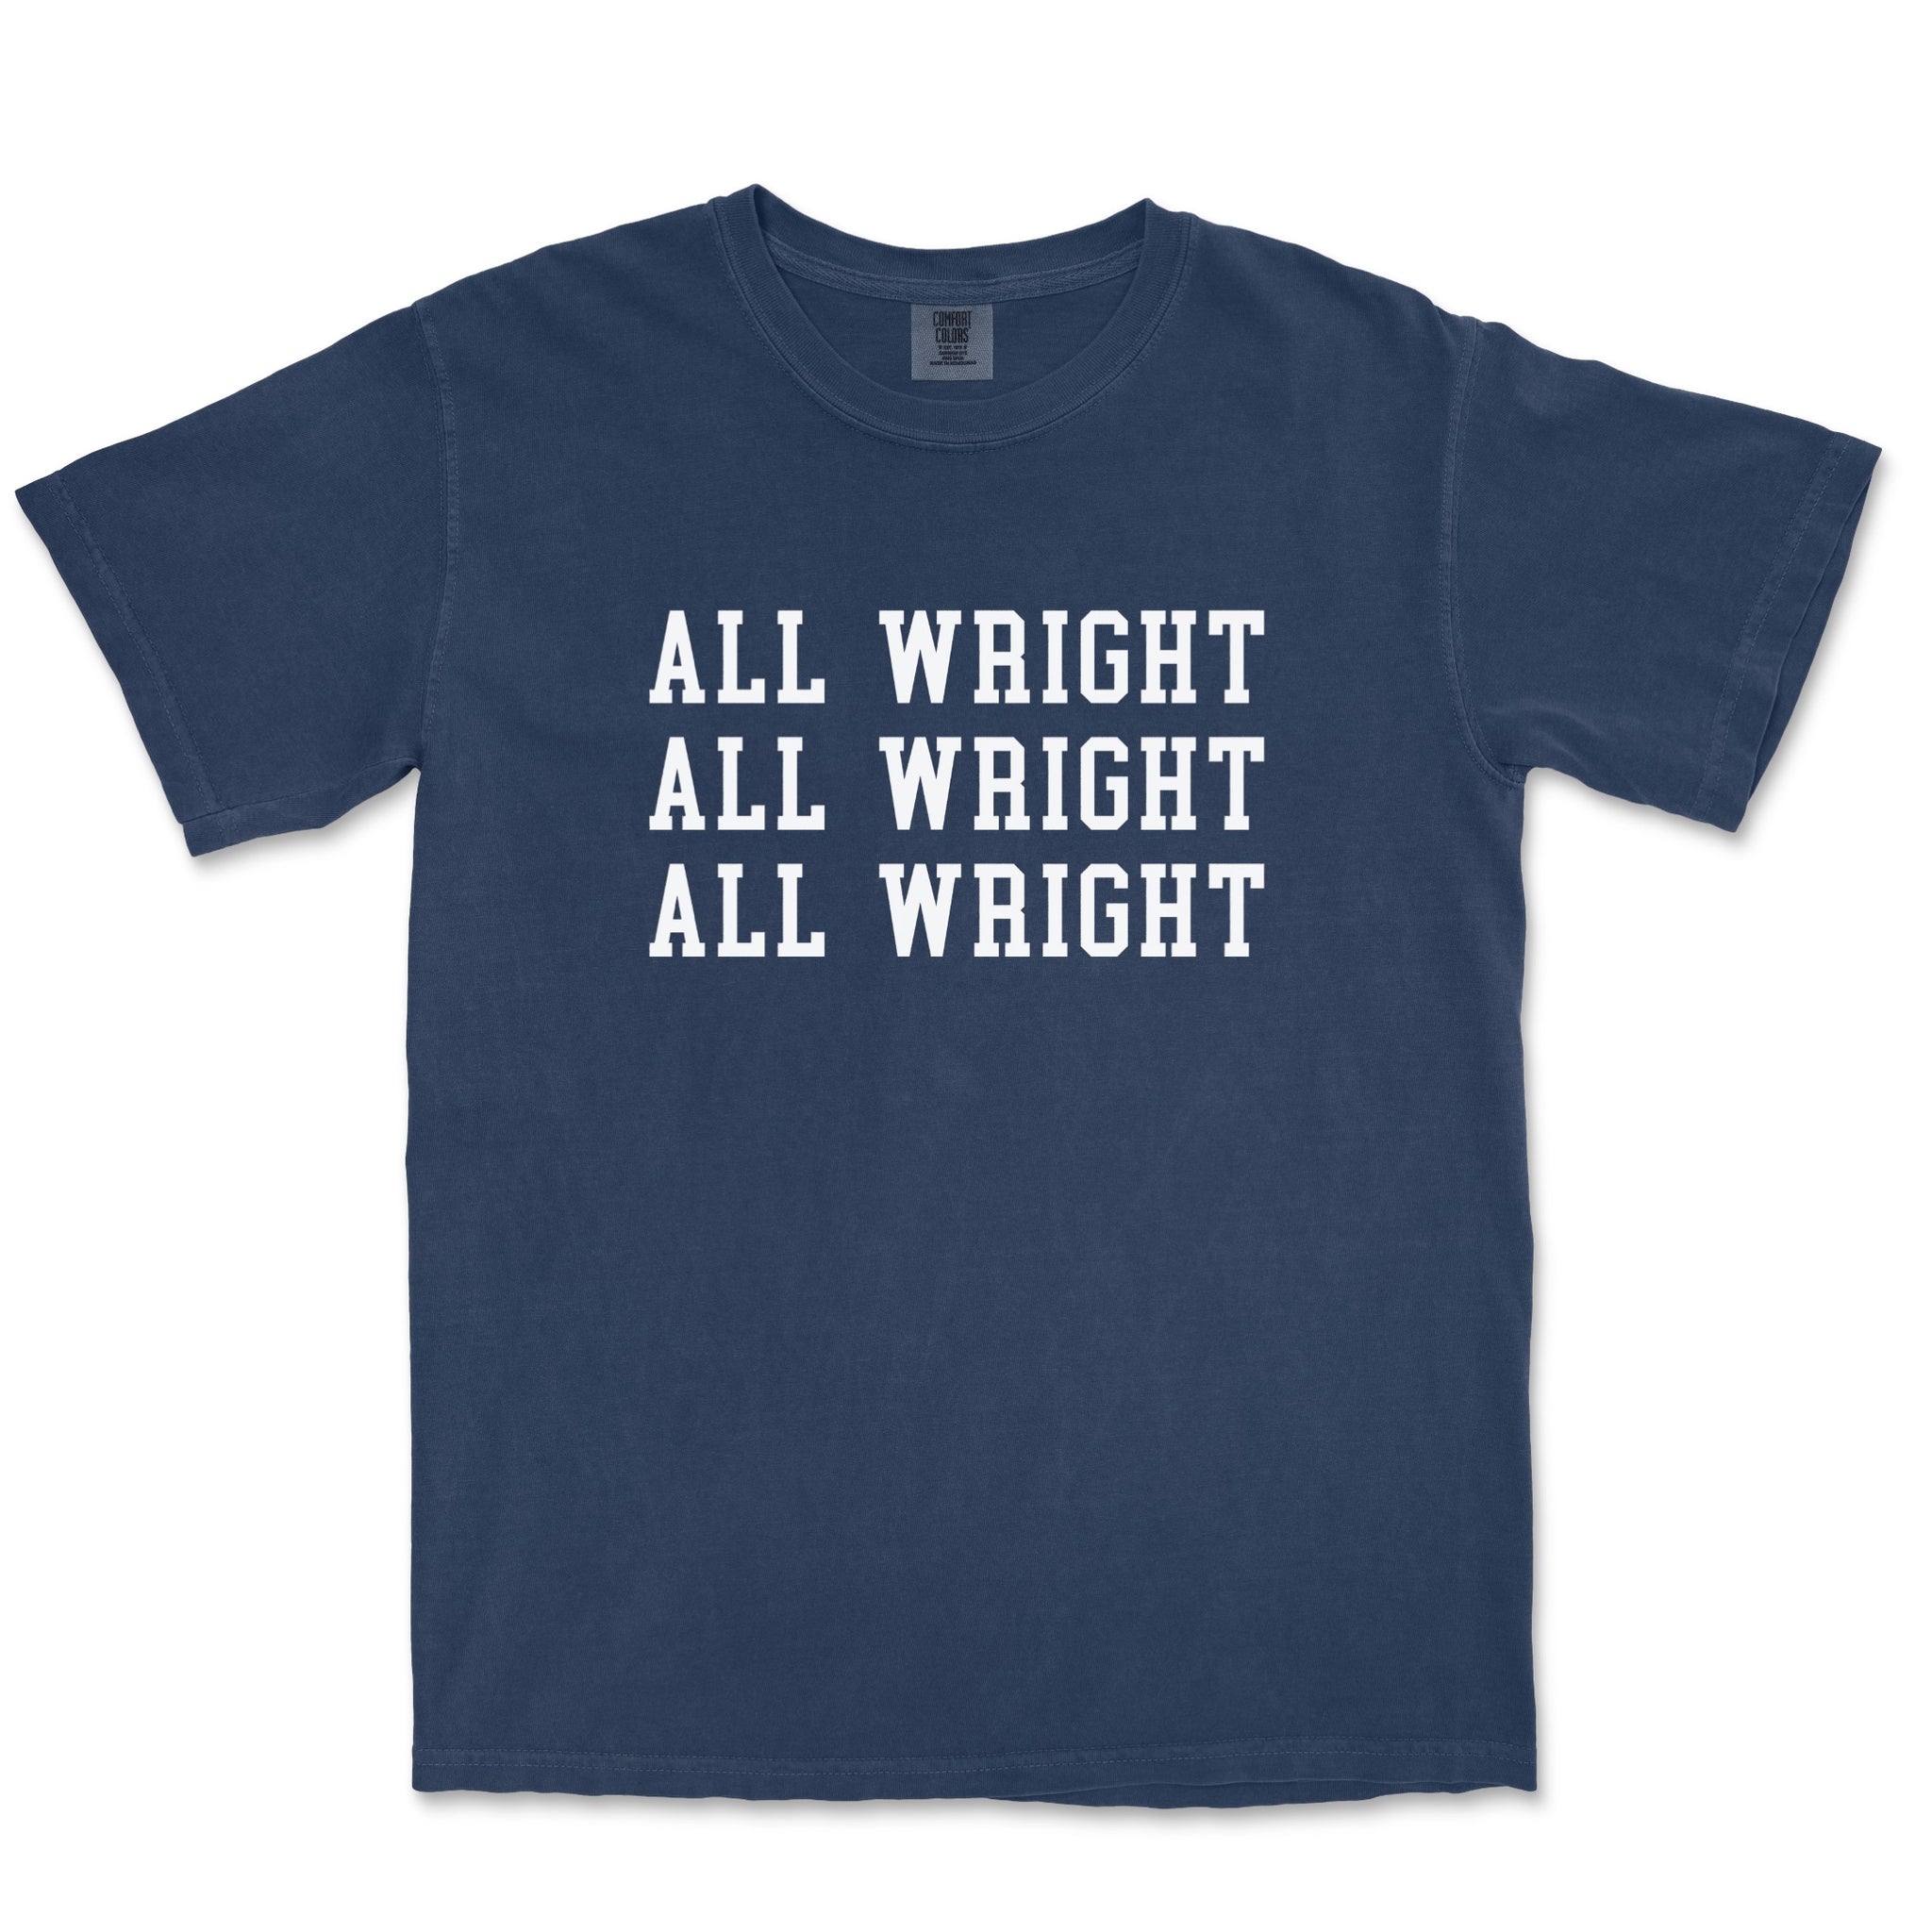 Villanova Basketball fan shirt for Coach Jay Wright saying "ALL WRIGHT ALL WRIGHT ALL WRIGHT" in white letters on navy shirt